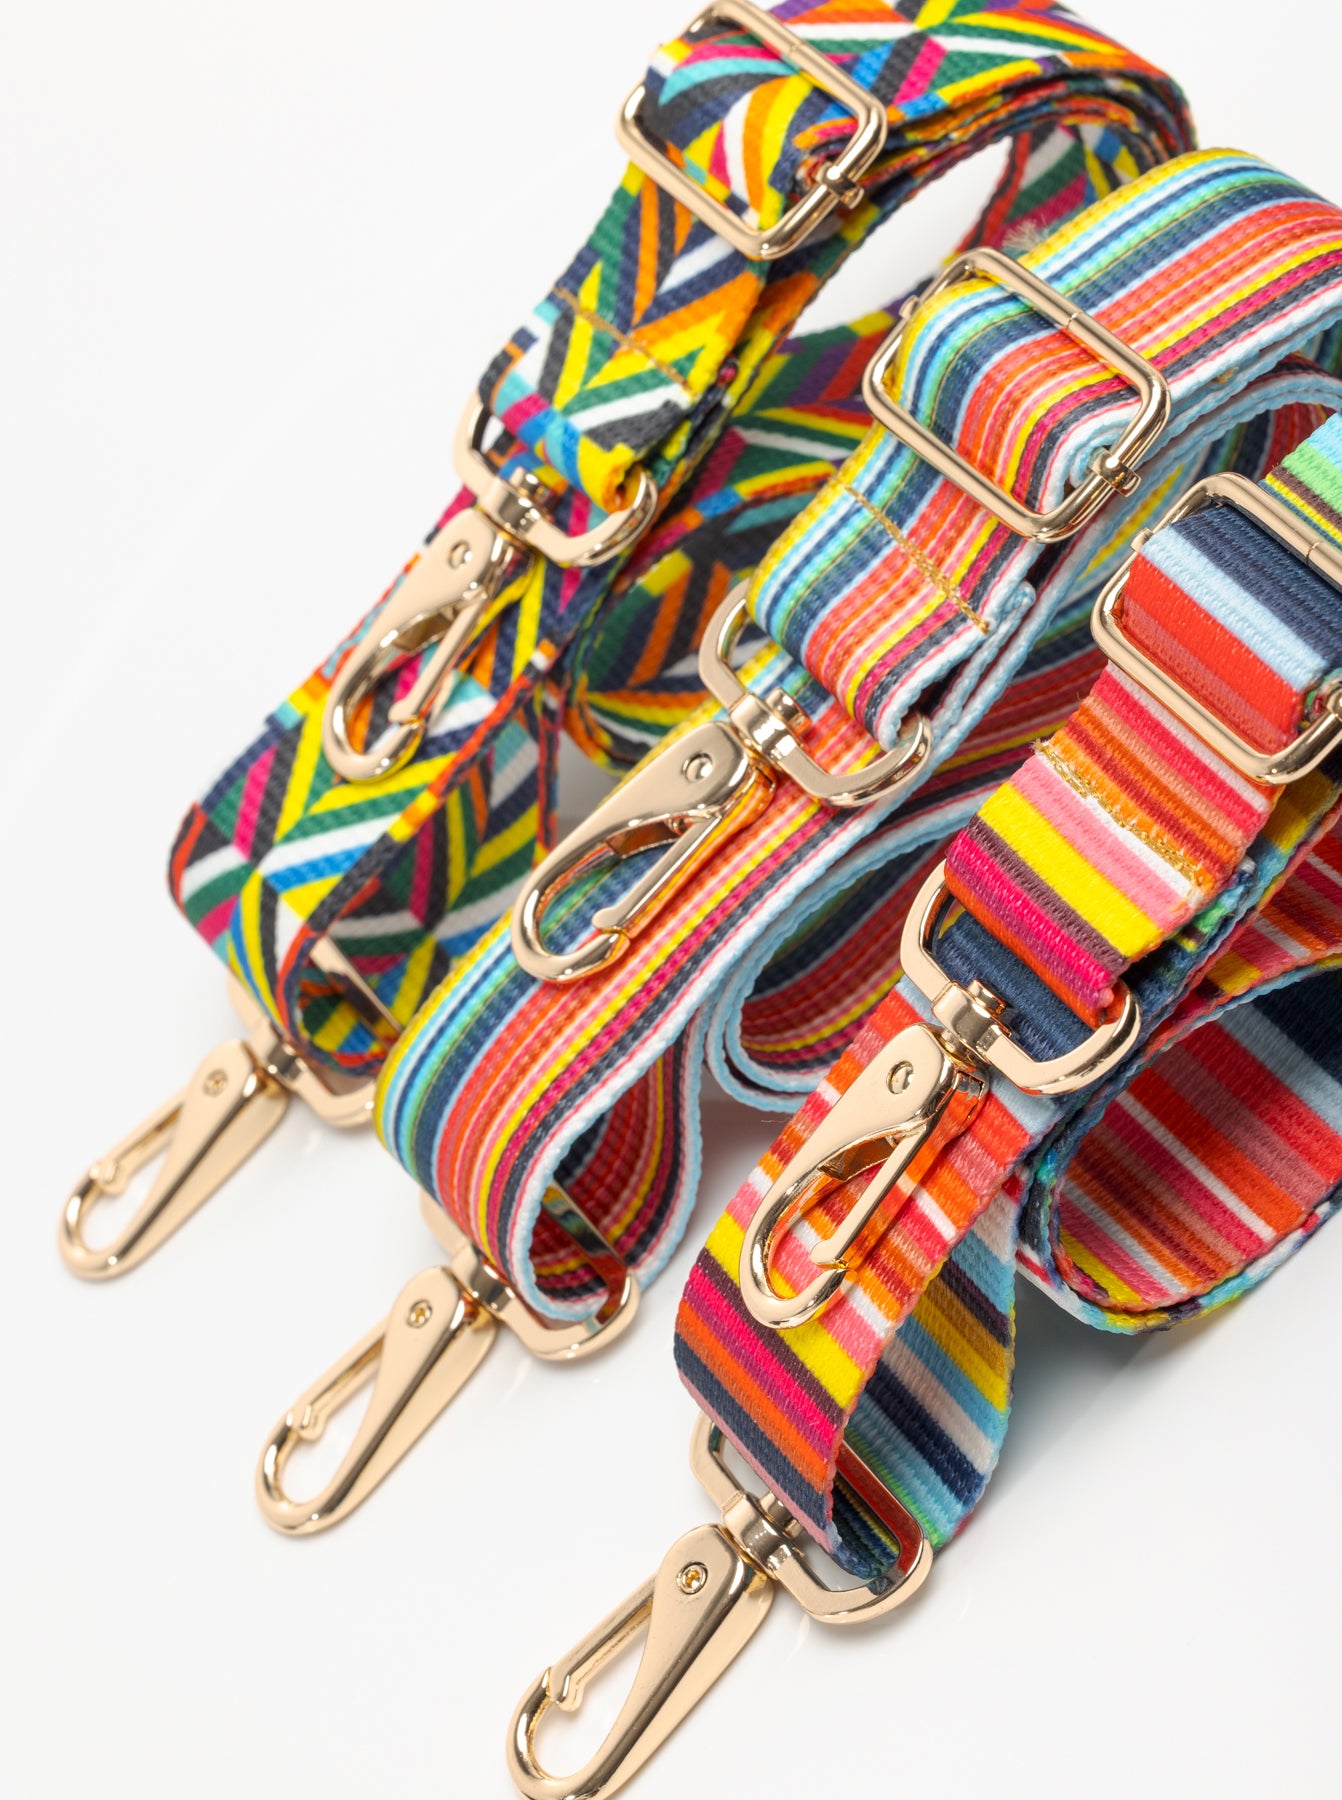 Three multi color purse straps with gold hardware